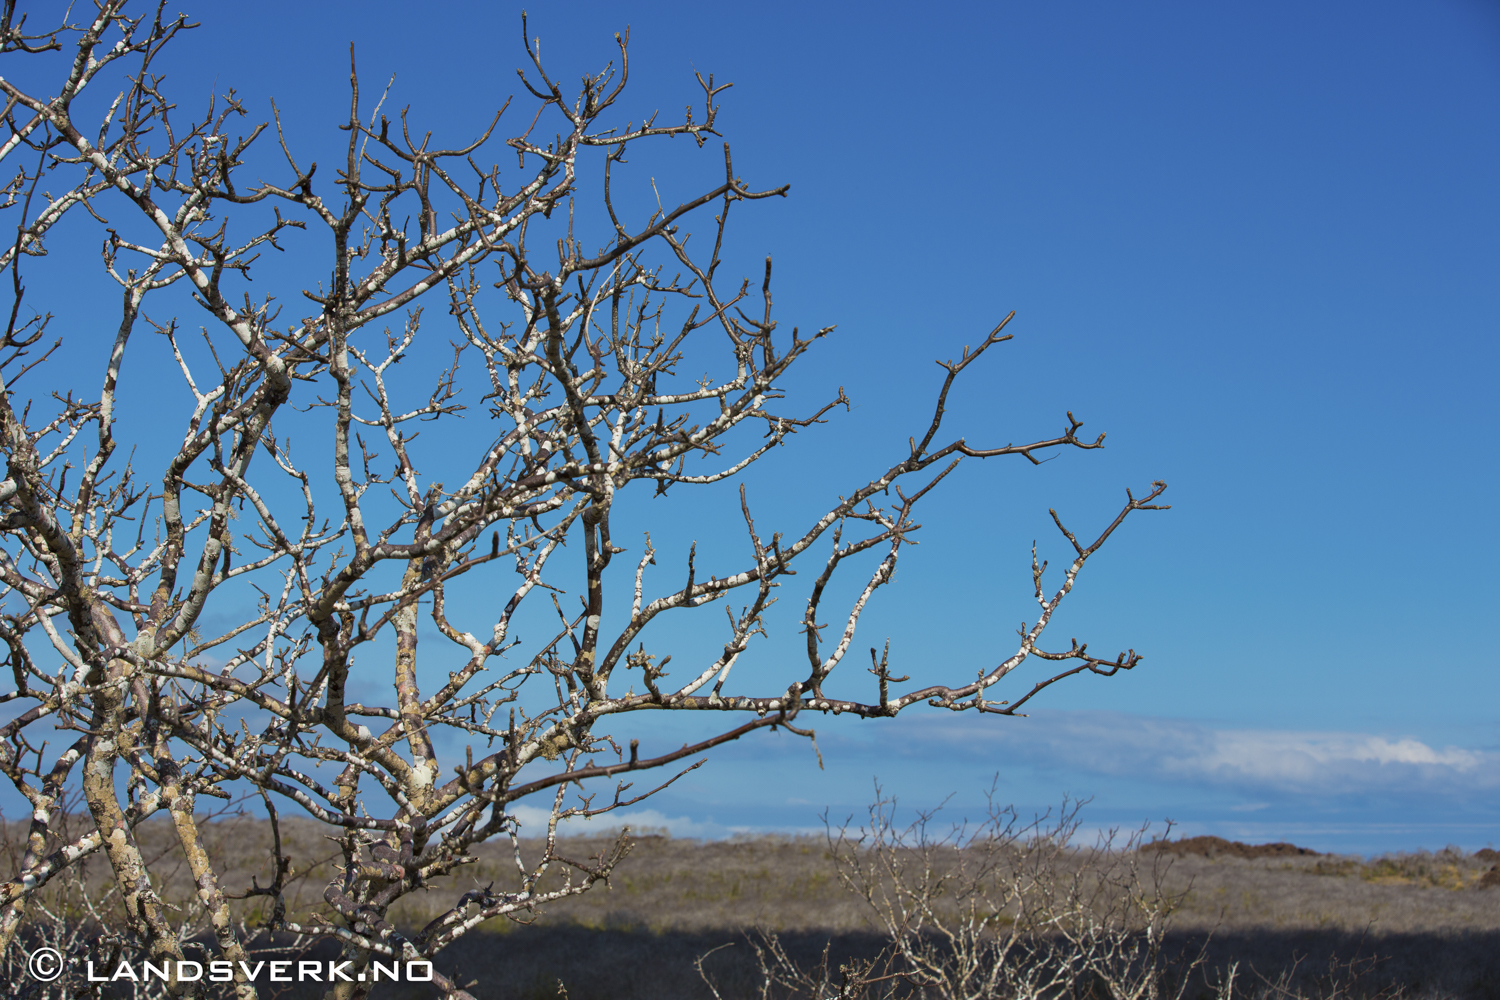 Cerro Dragon, Galapagos. 

(Canon EOS 5D Mark III / Canon EF 70-200mm f/2.8 L IS II USM)